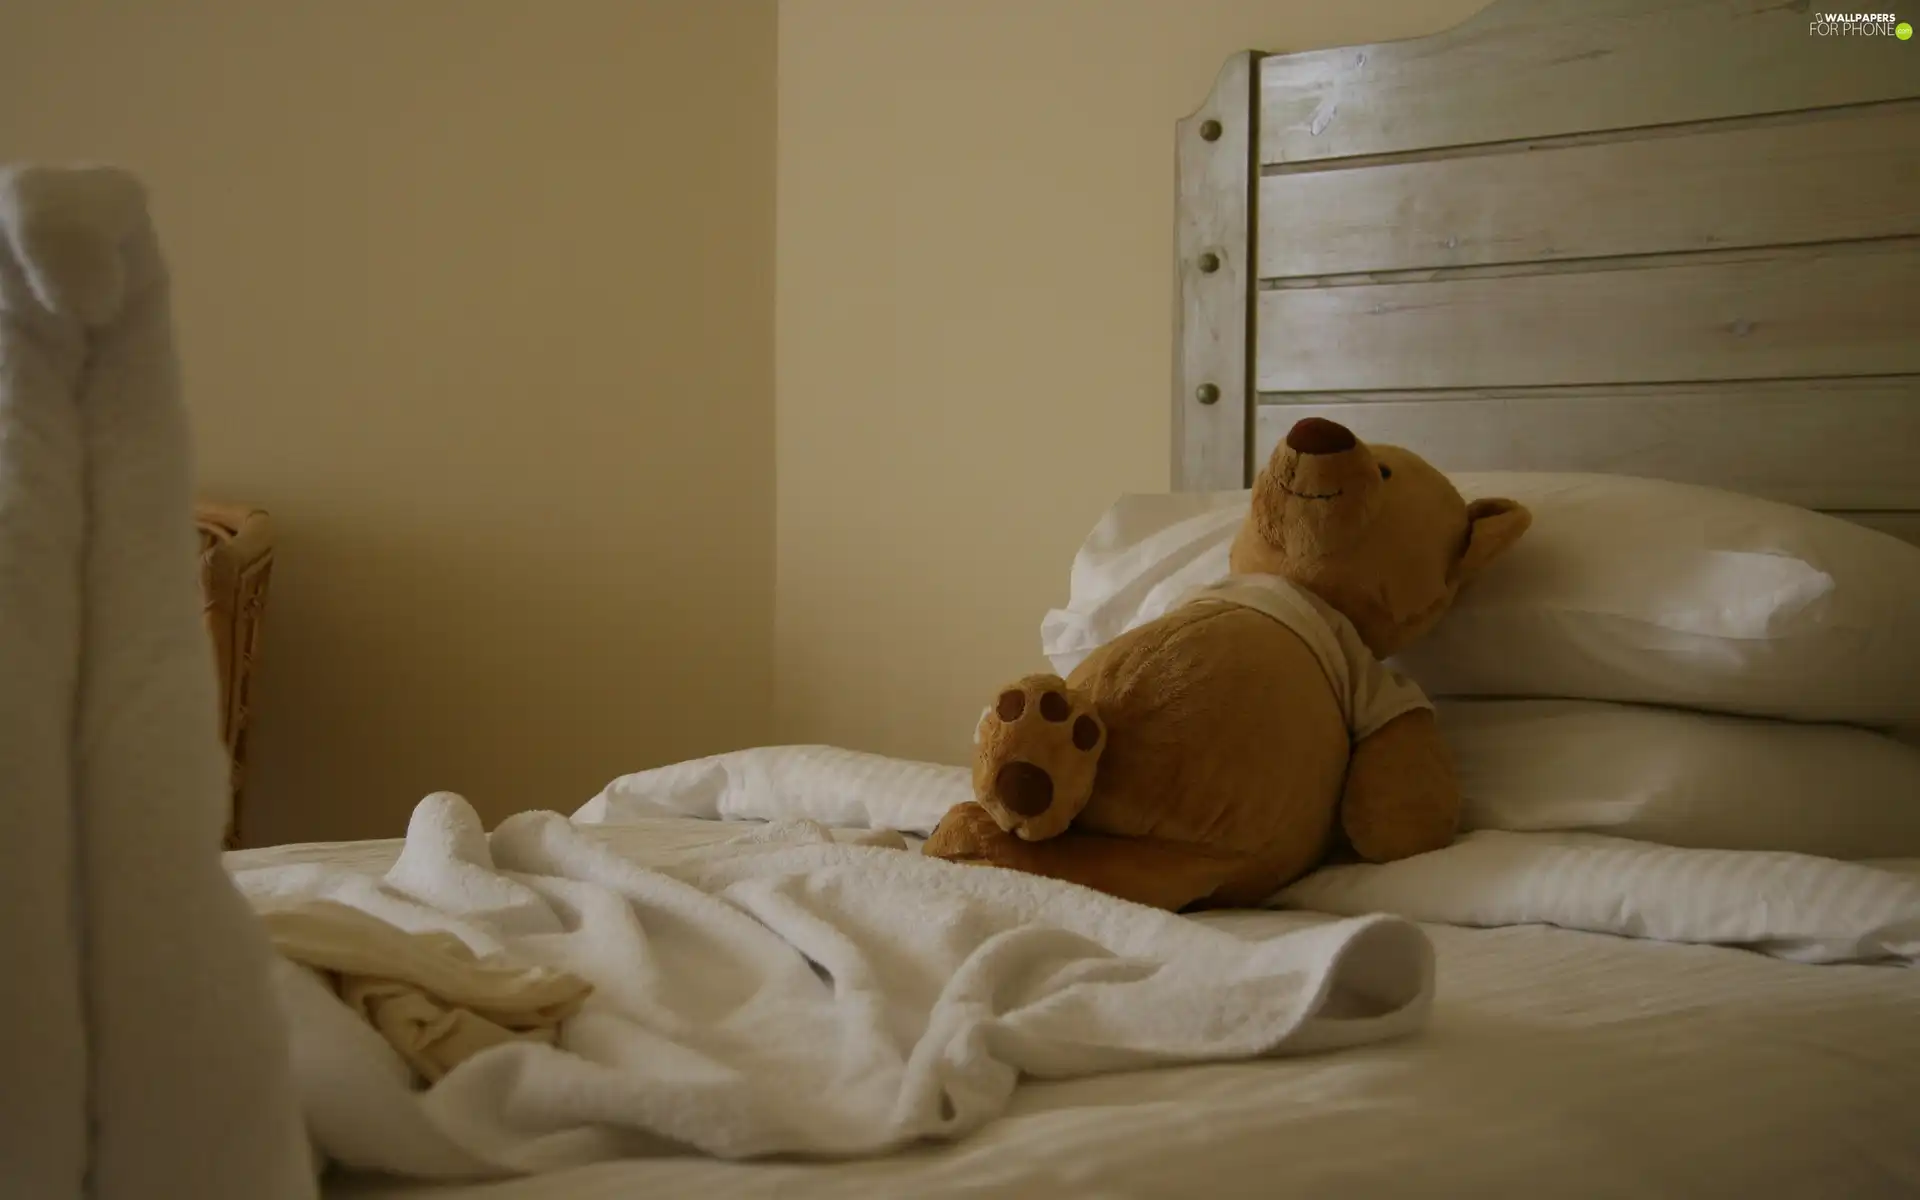 teddy bear, resting, White Bed, plush toy